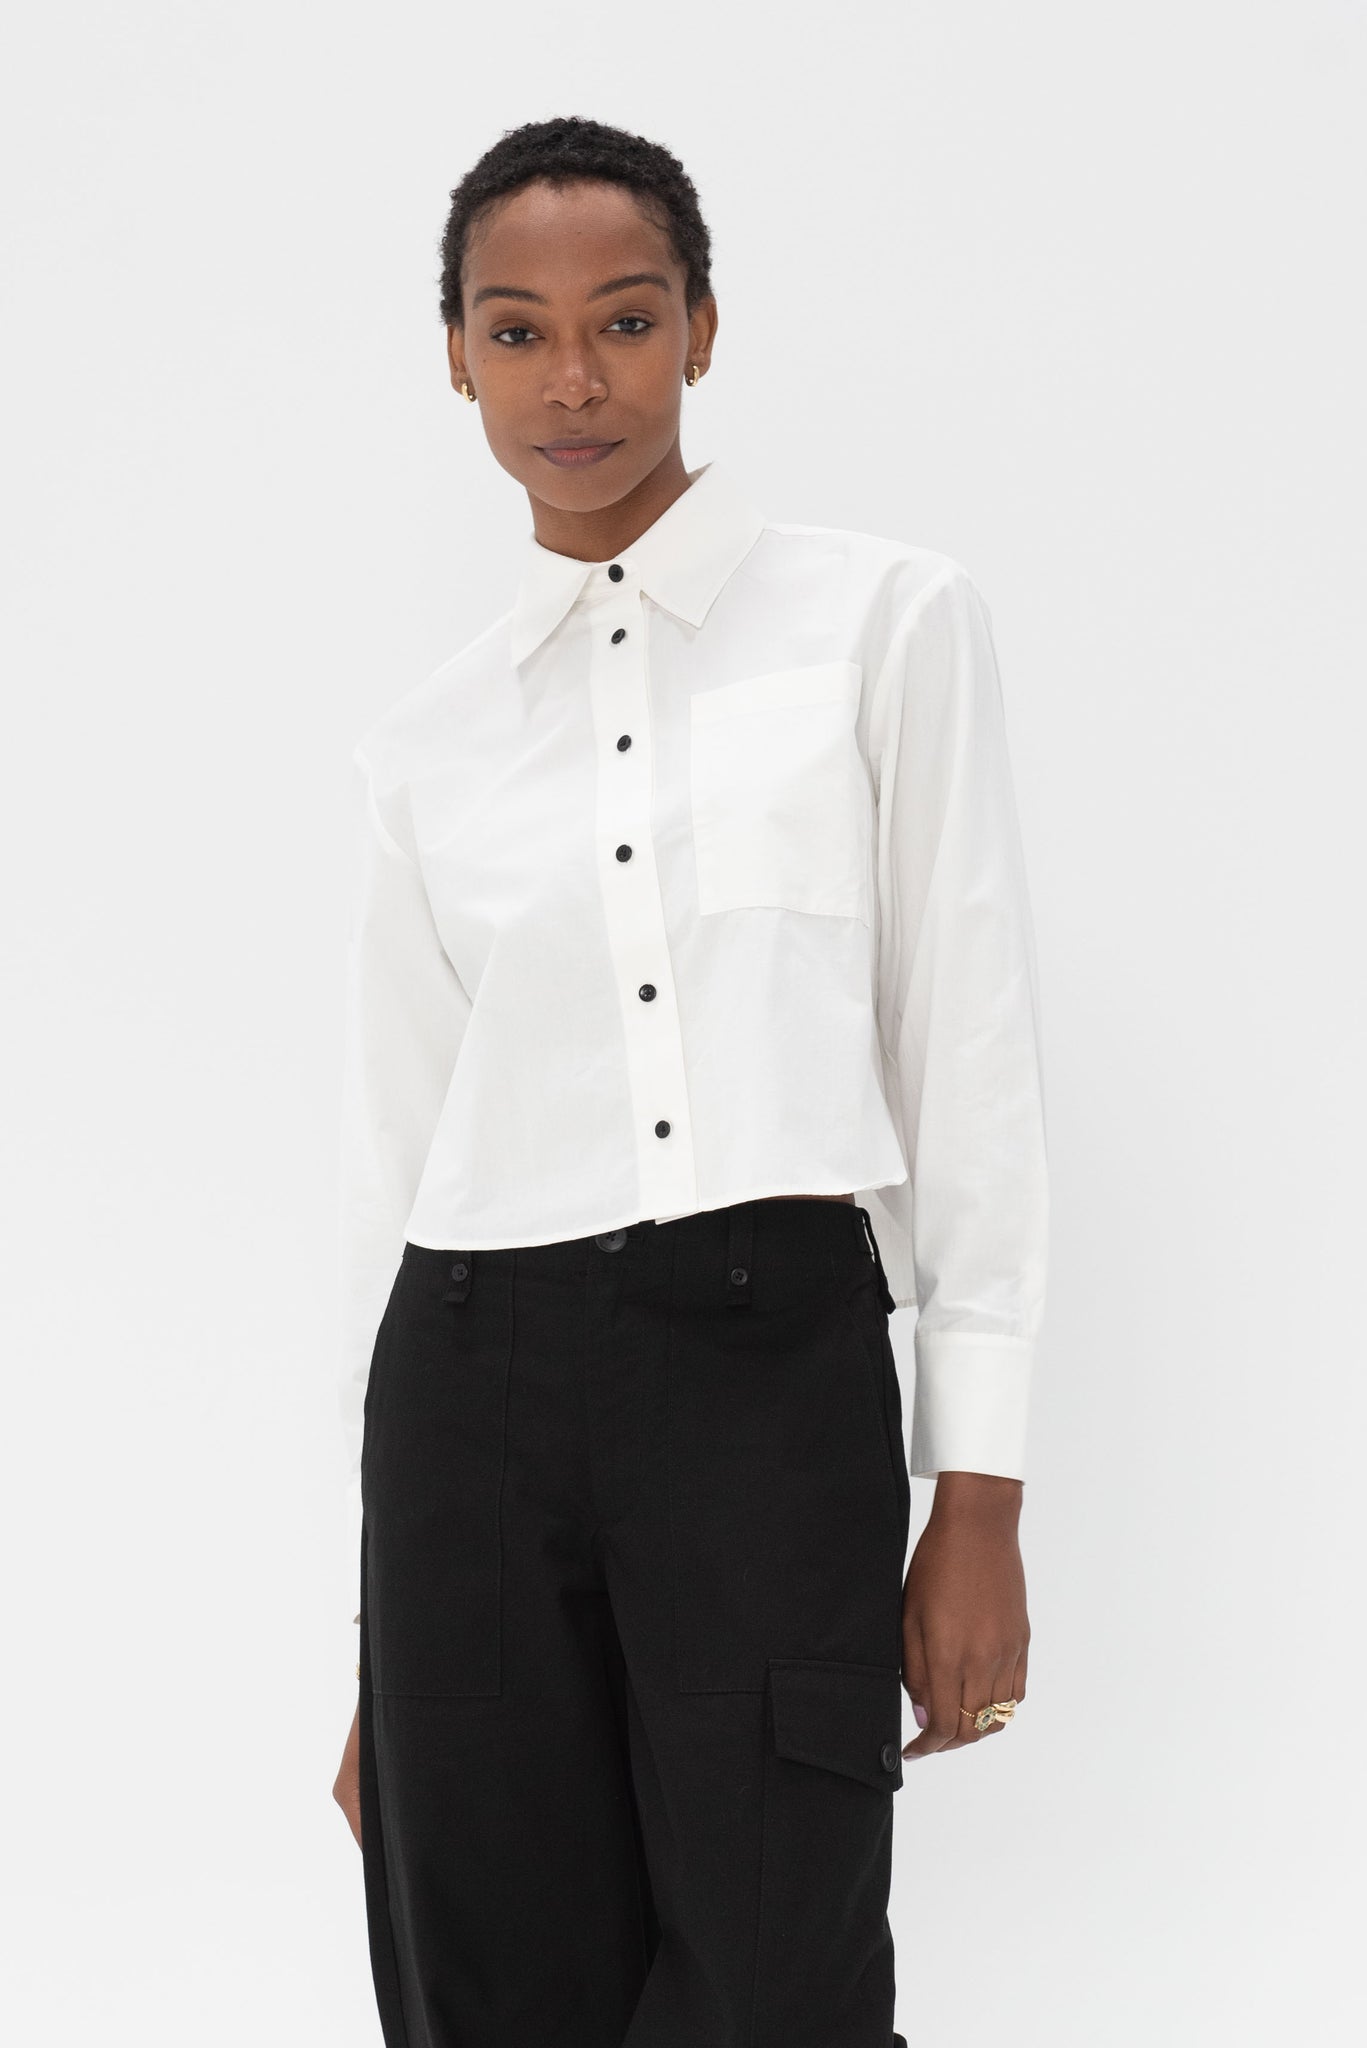 Proenza Schouler White Label - Alma Shirt in Peached Poplin, White